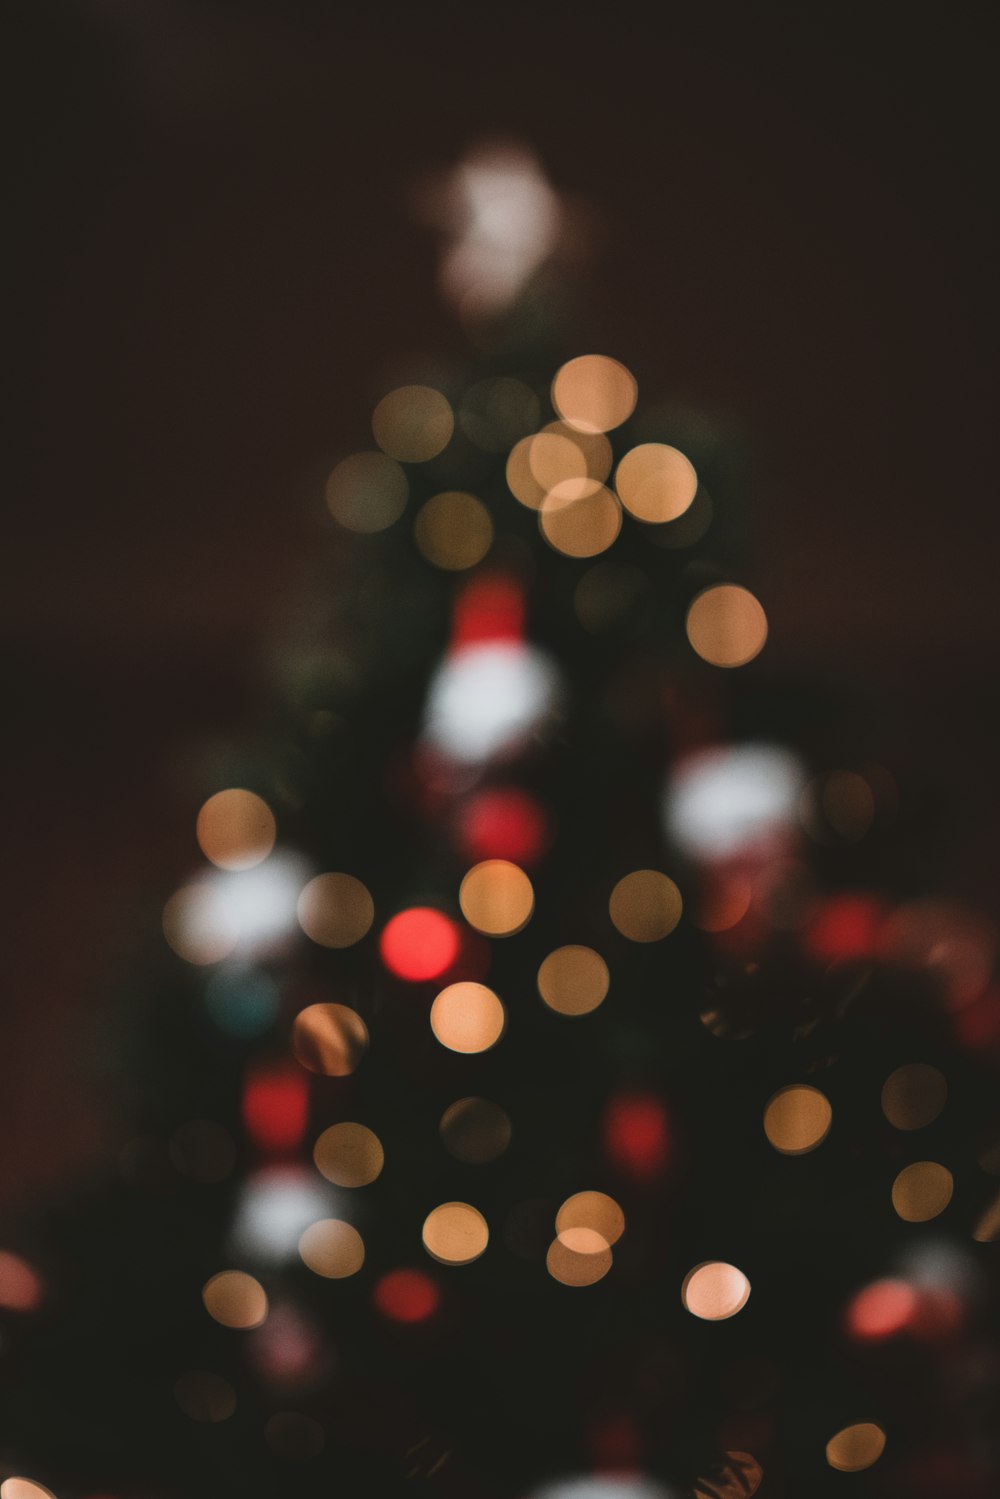 bokeh photography of Christmas tree with lights